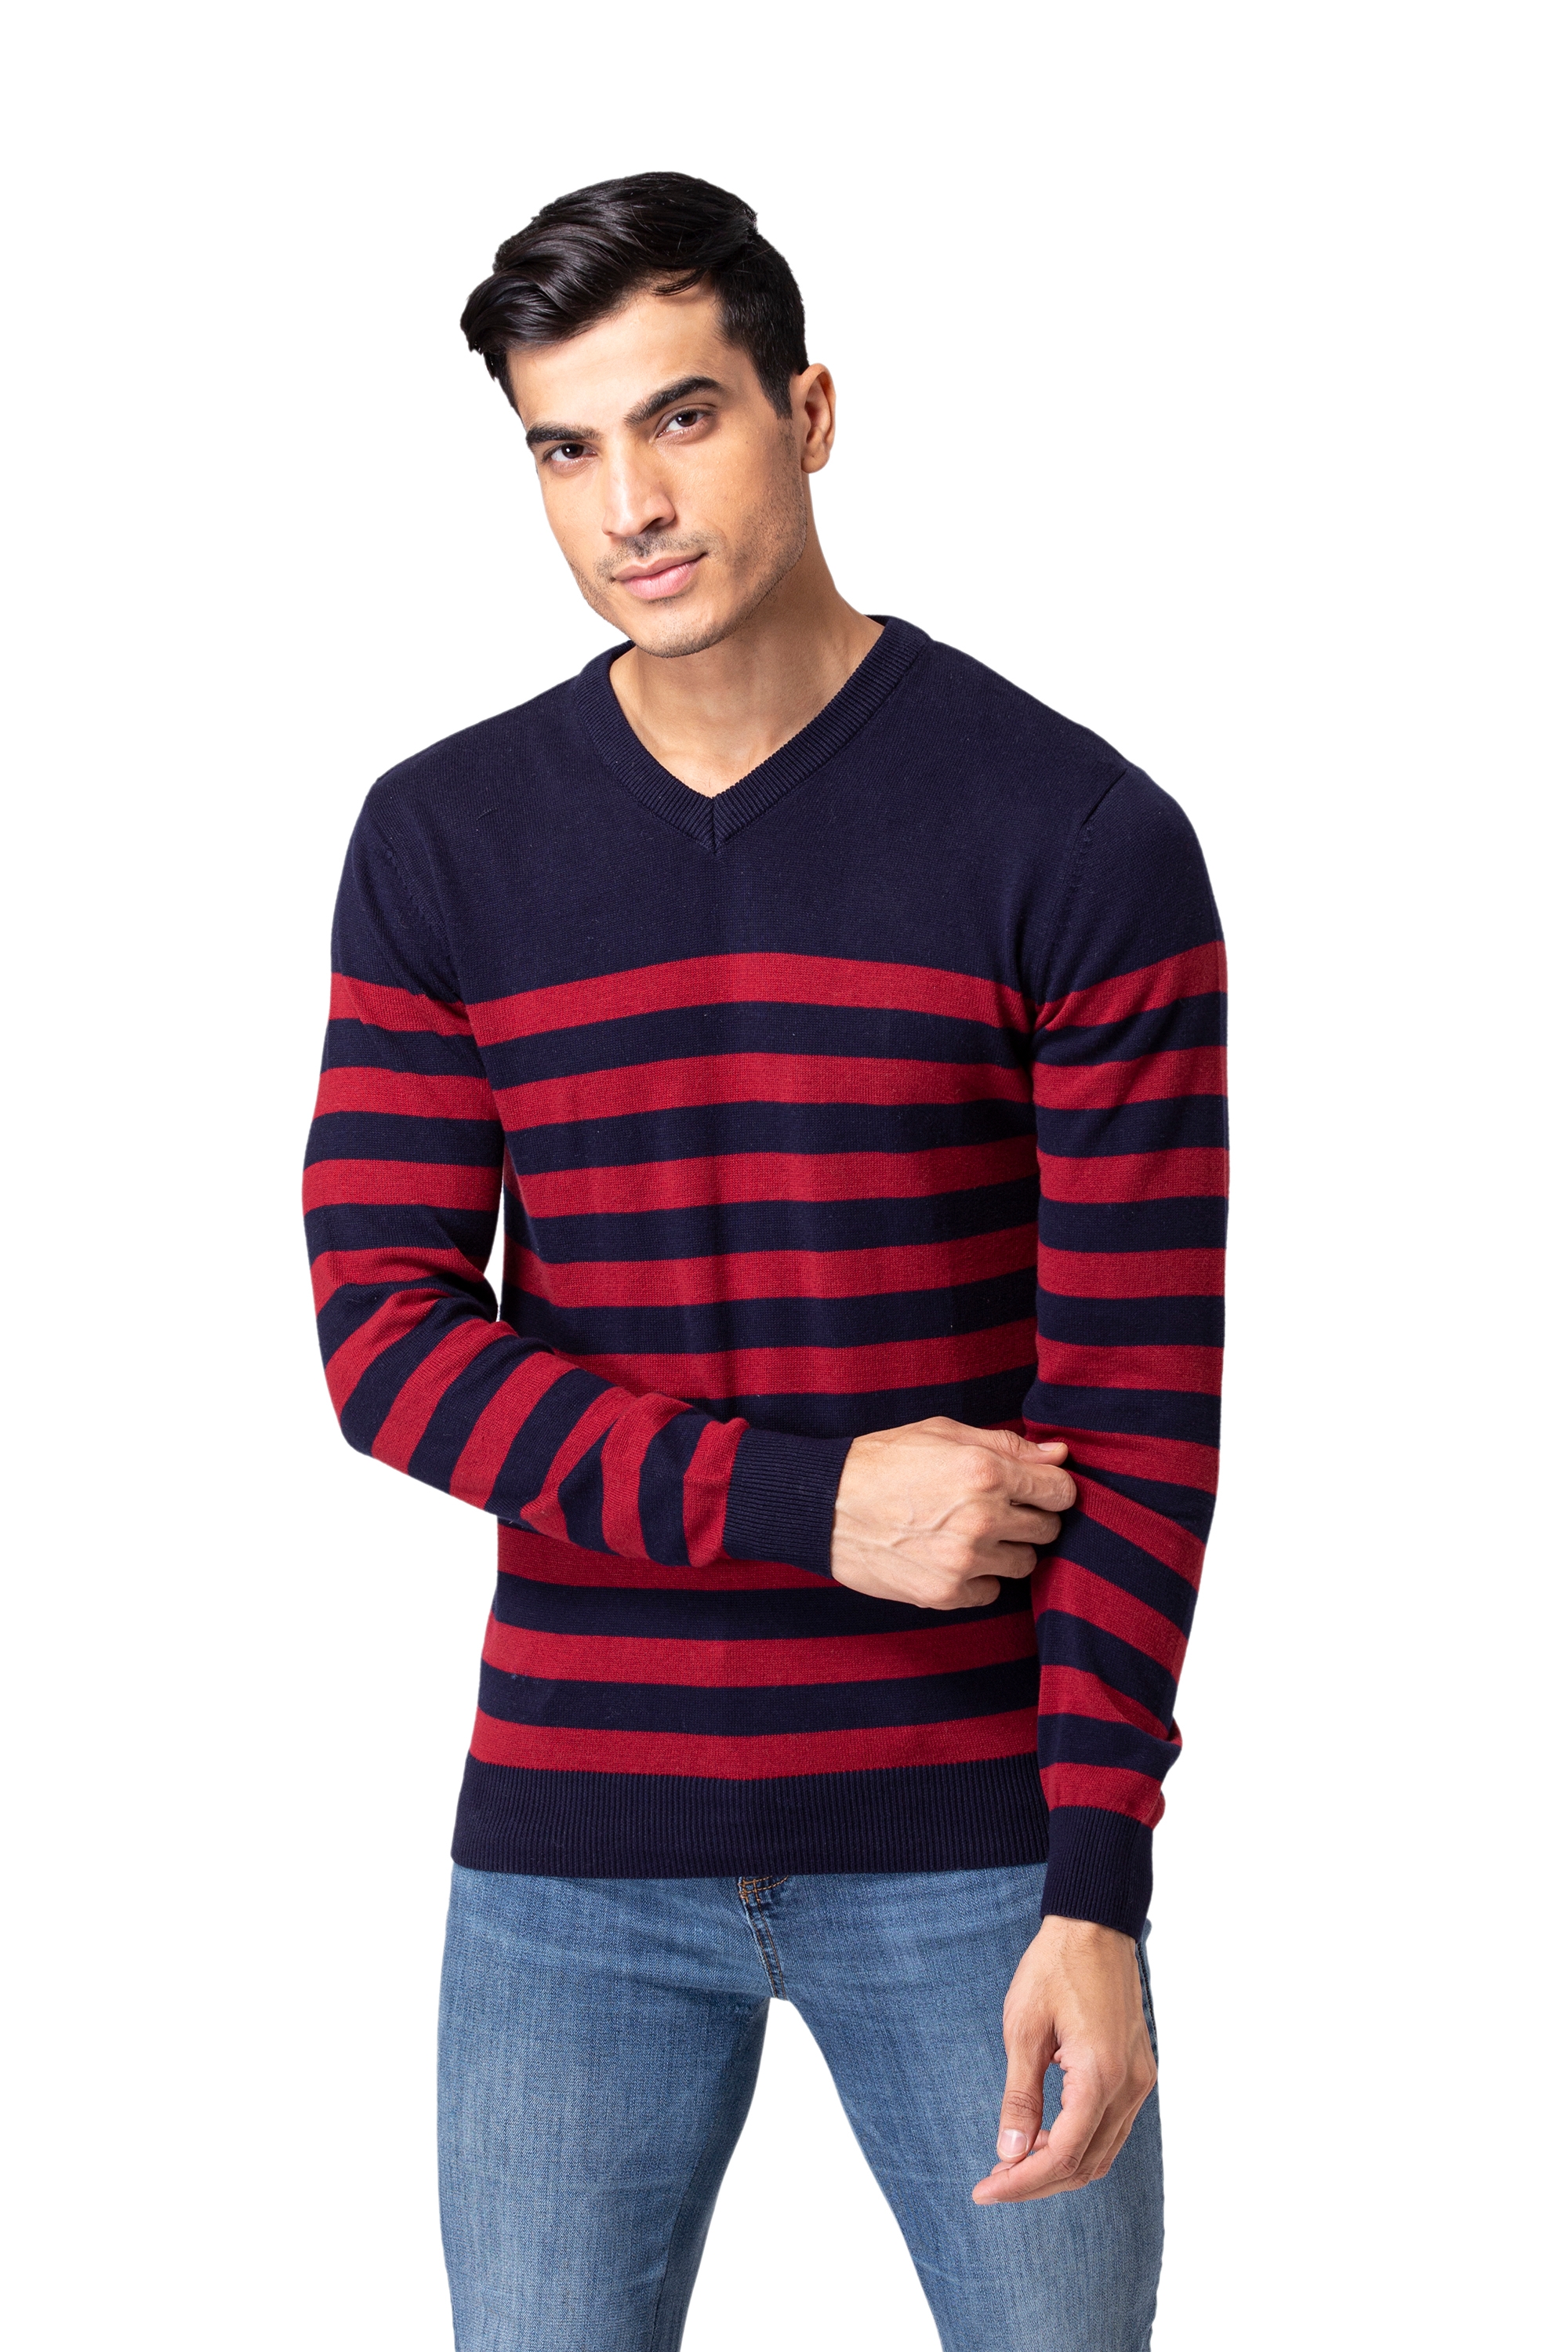 Allen Cooper | Allen Cooper Navy Blue Striped V-Neck Sweater